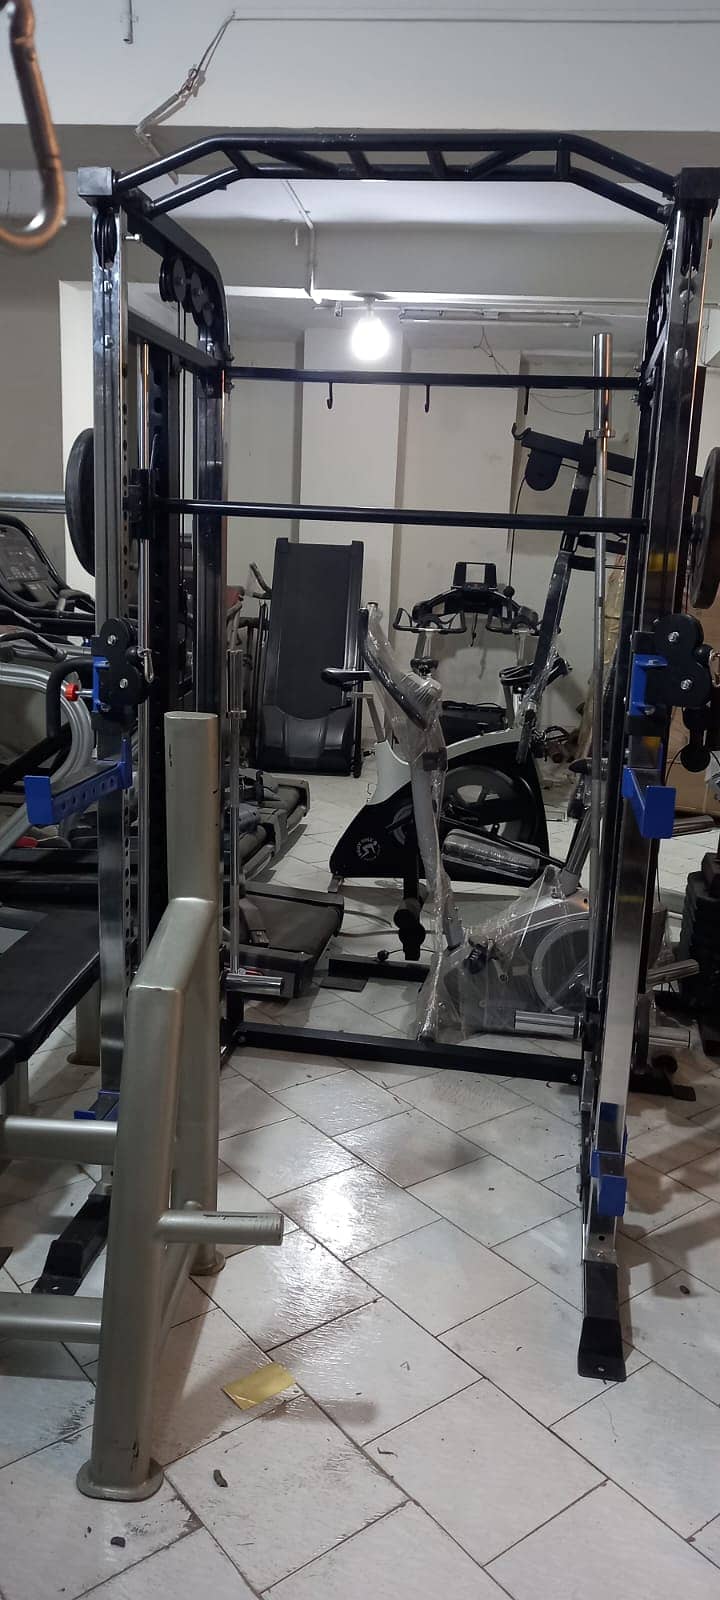 Full Gym Equipment setup Commercial Strength treadmil elliptical cable 8